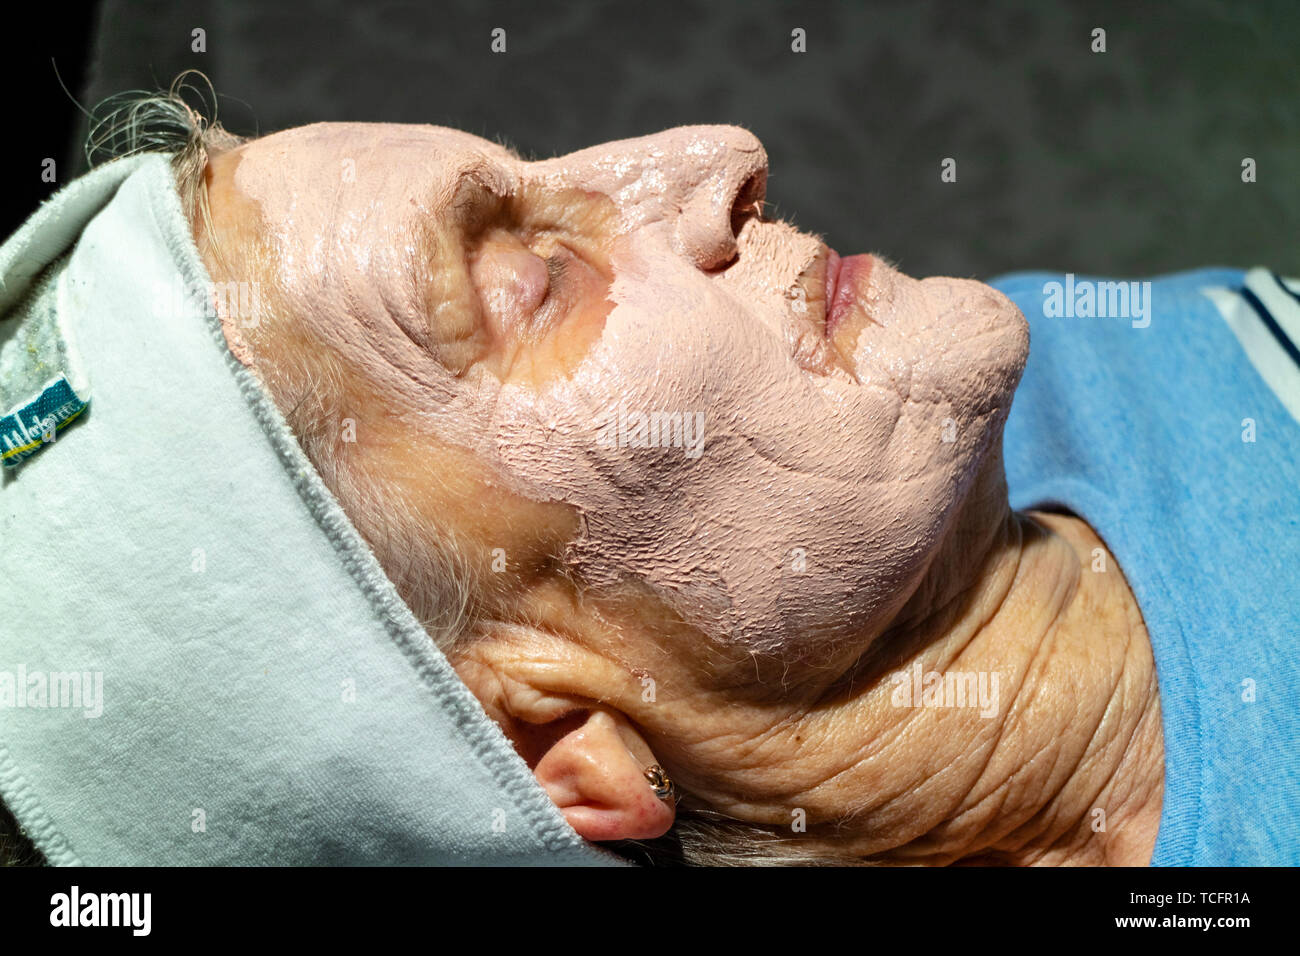 Berkshire, UK. June 2019. An elderly woman's face during facial beauty treatment. Stock Photo